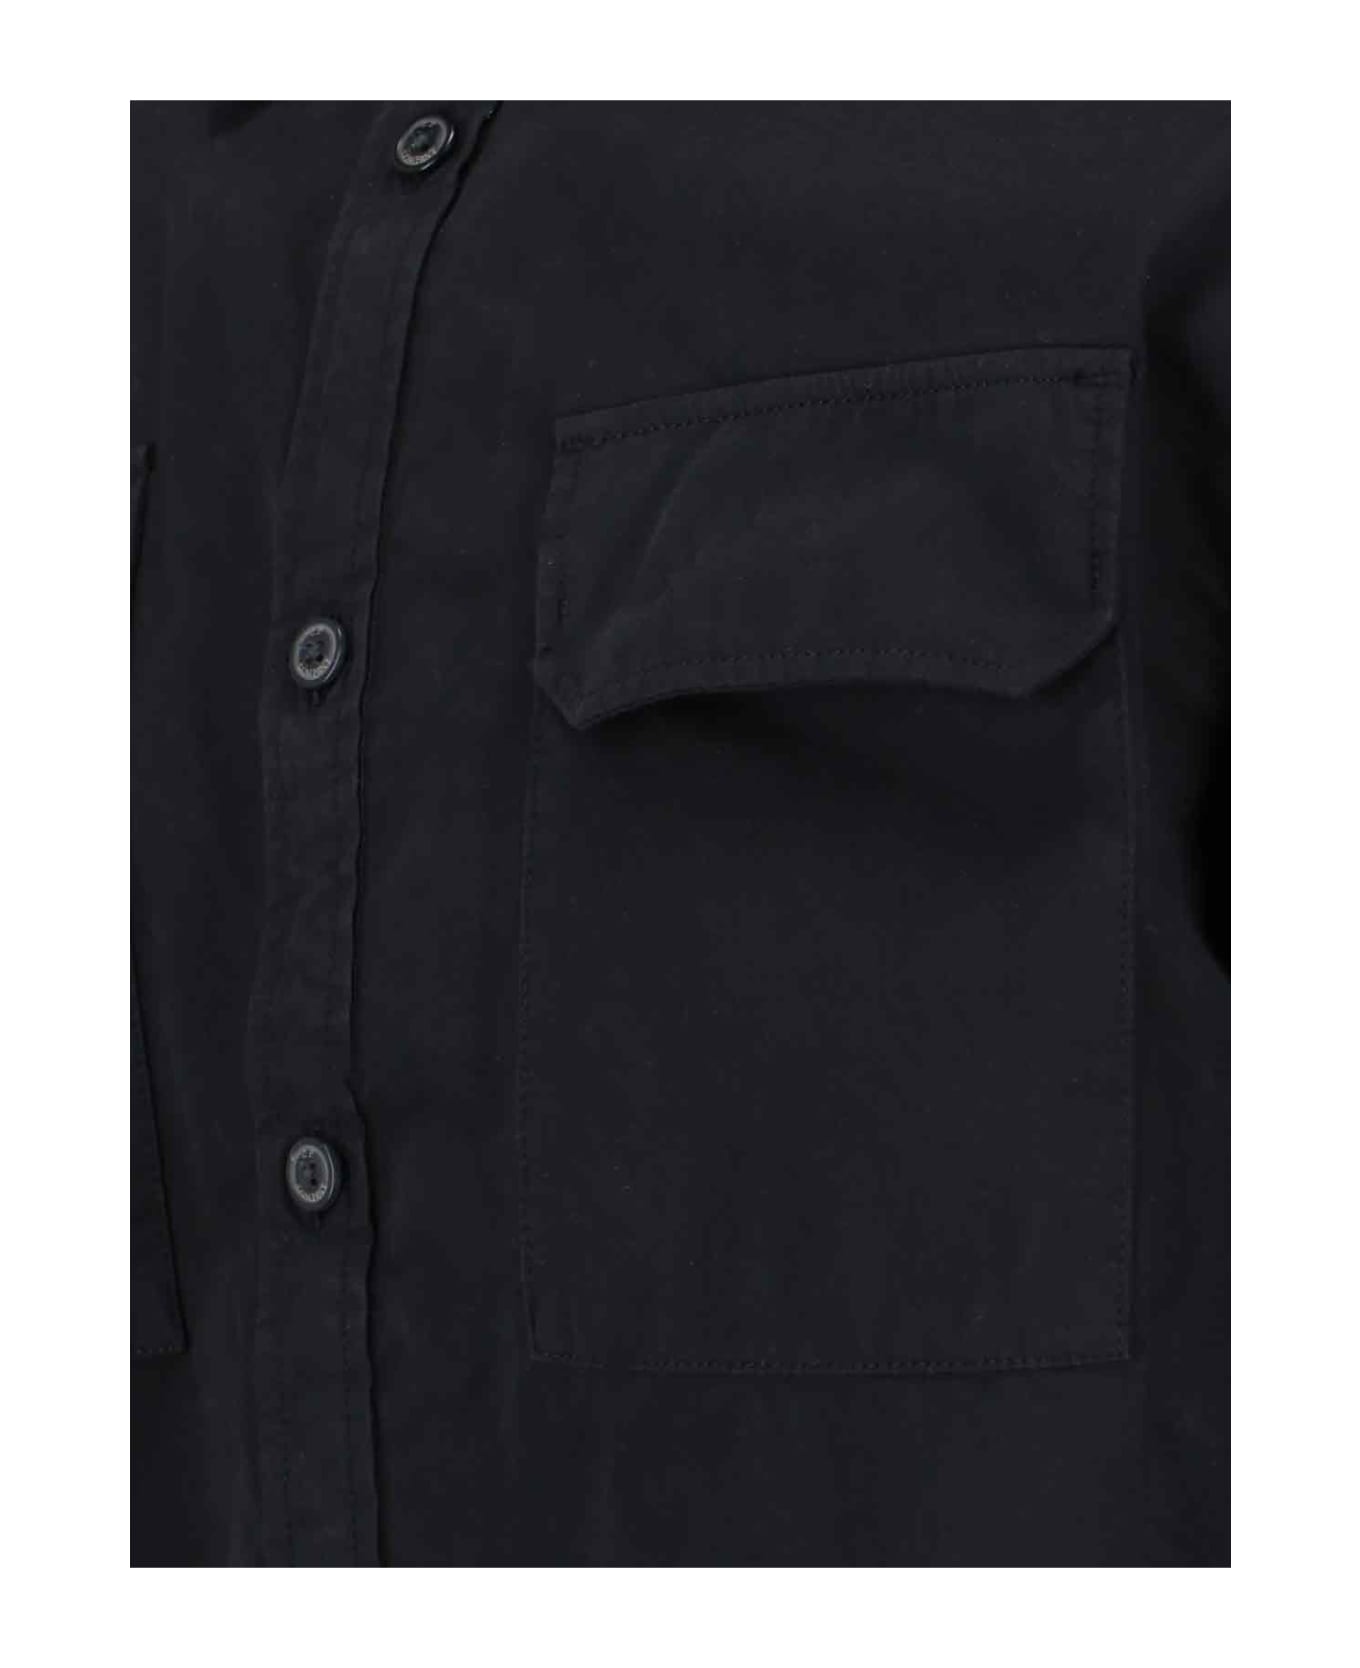 C.P. Company 'lens' Detail Shirt - Black